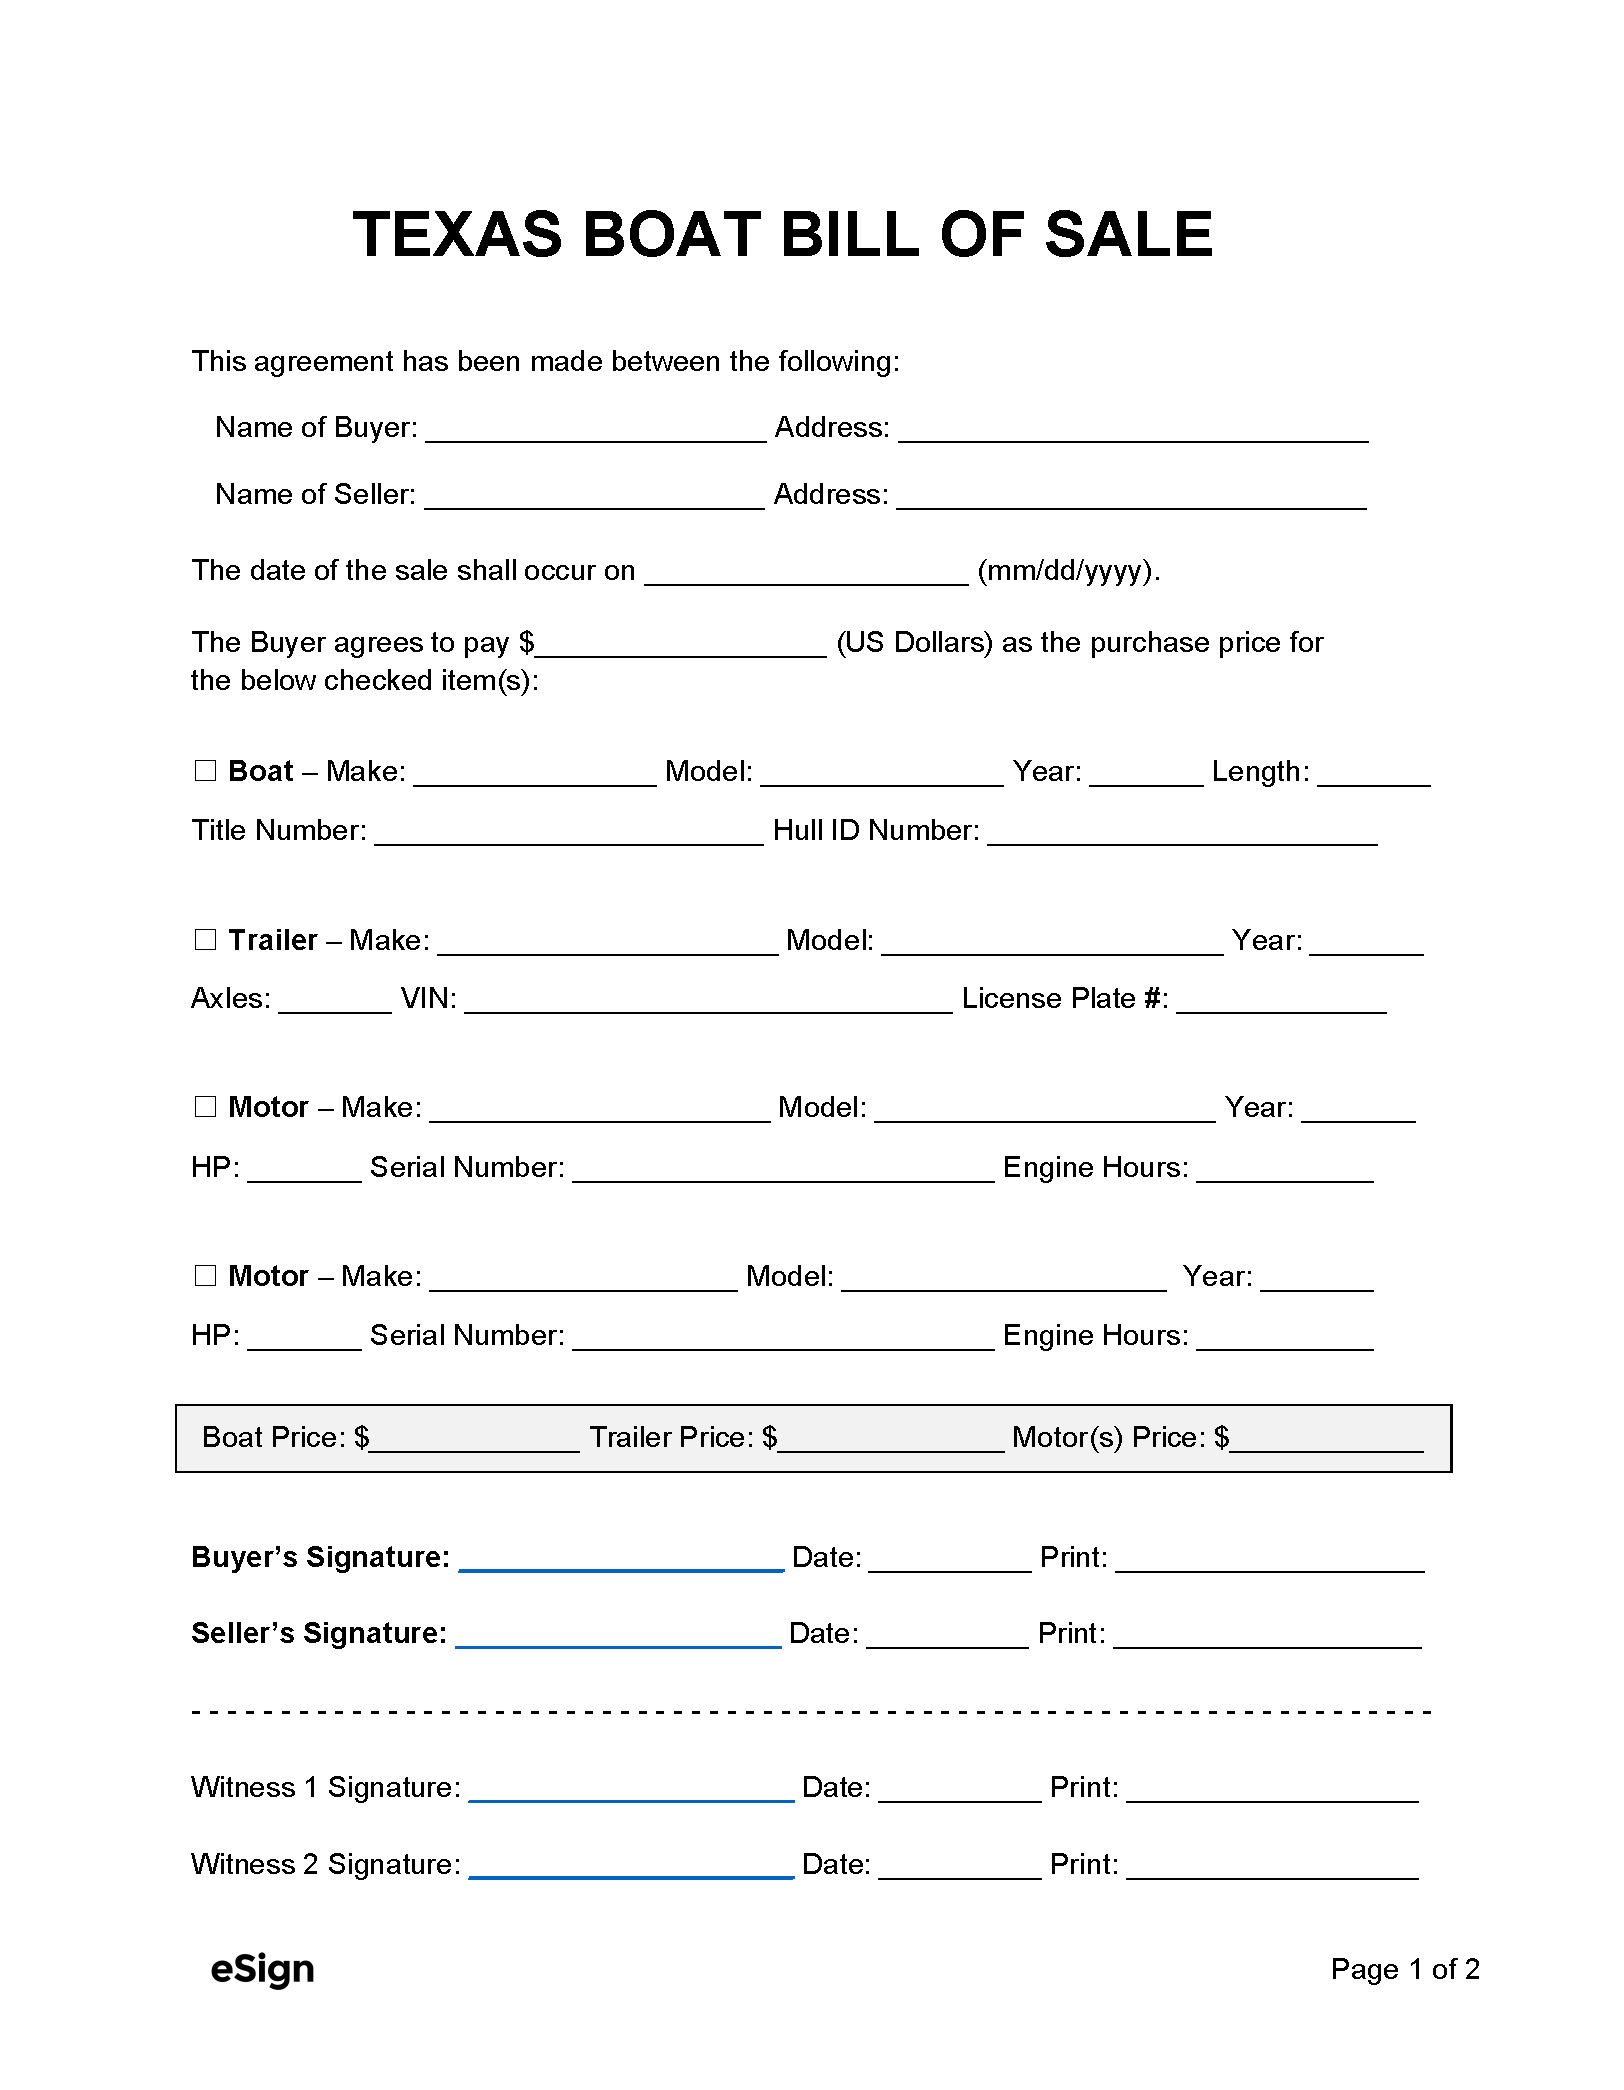 Free Texas Boat Bill of Sale Form - PDF | Word